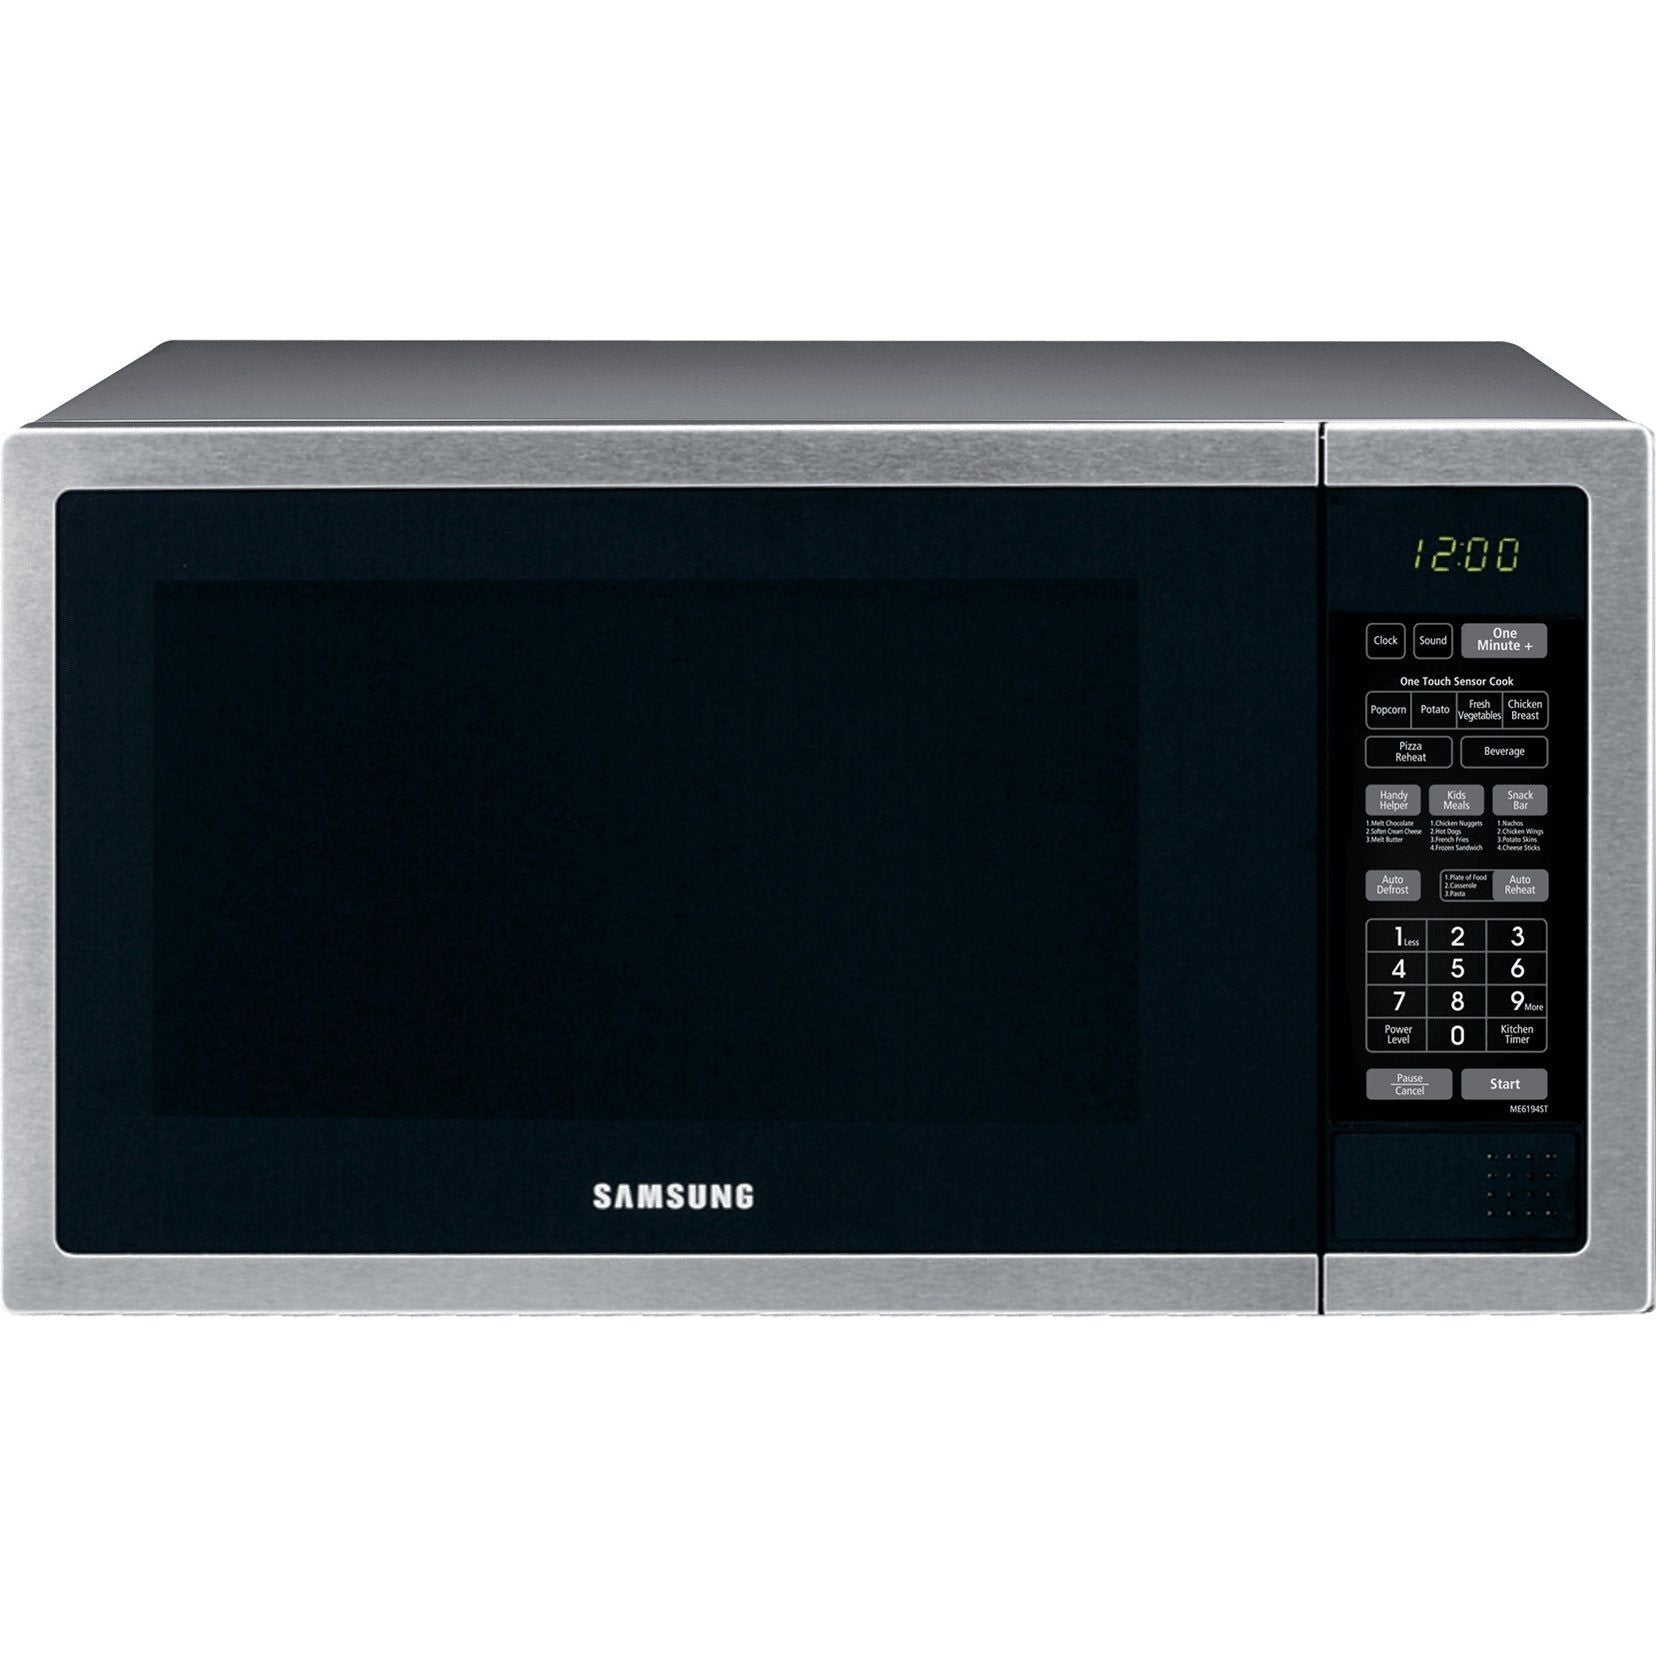 Samsung ME6194ST 55L Microwave - New World